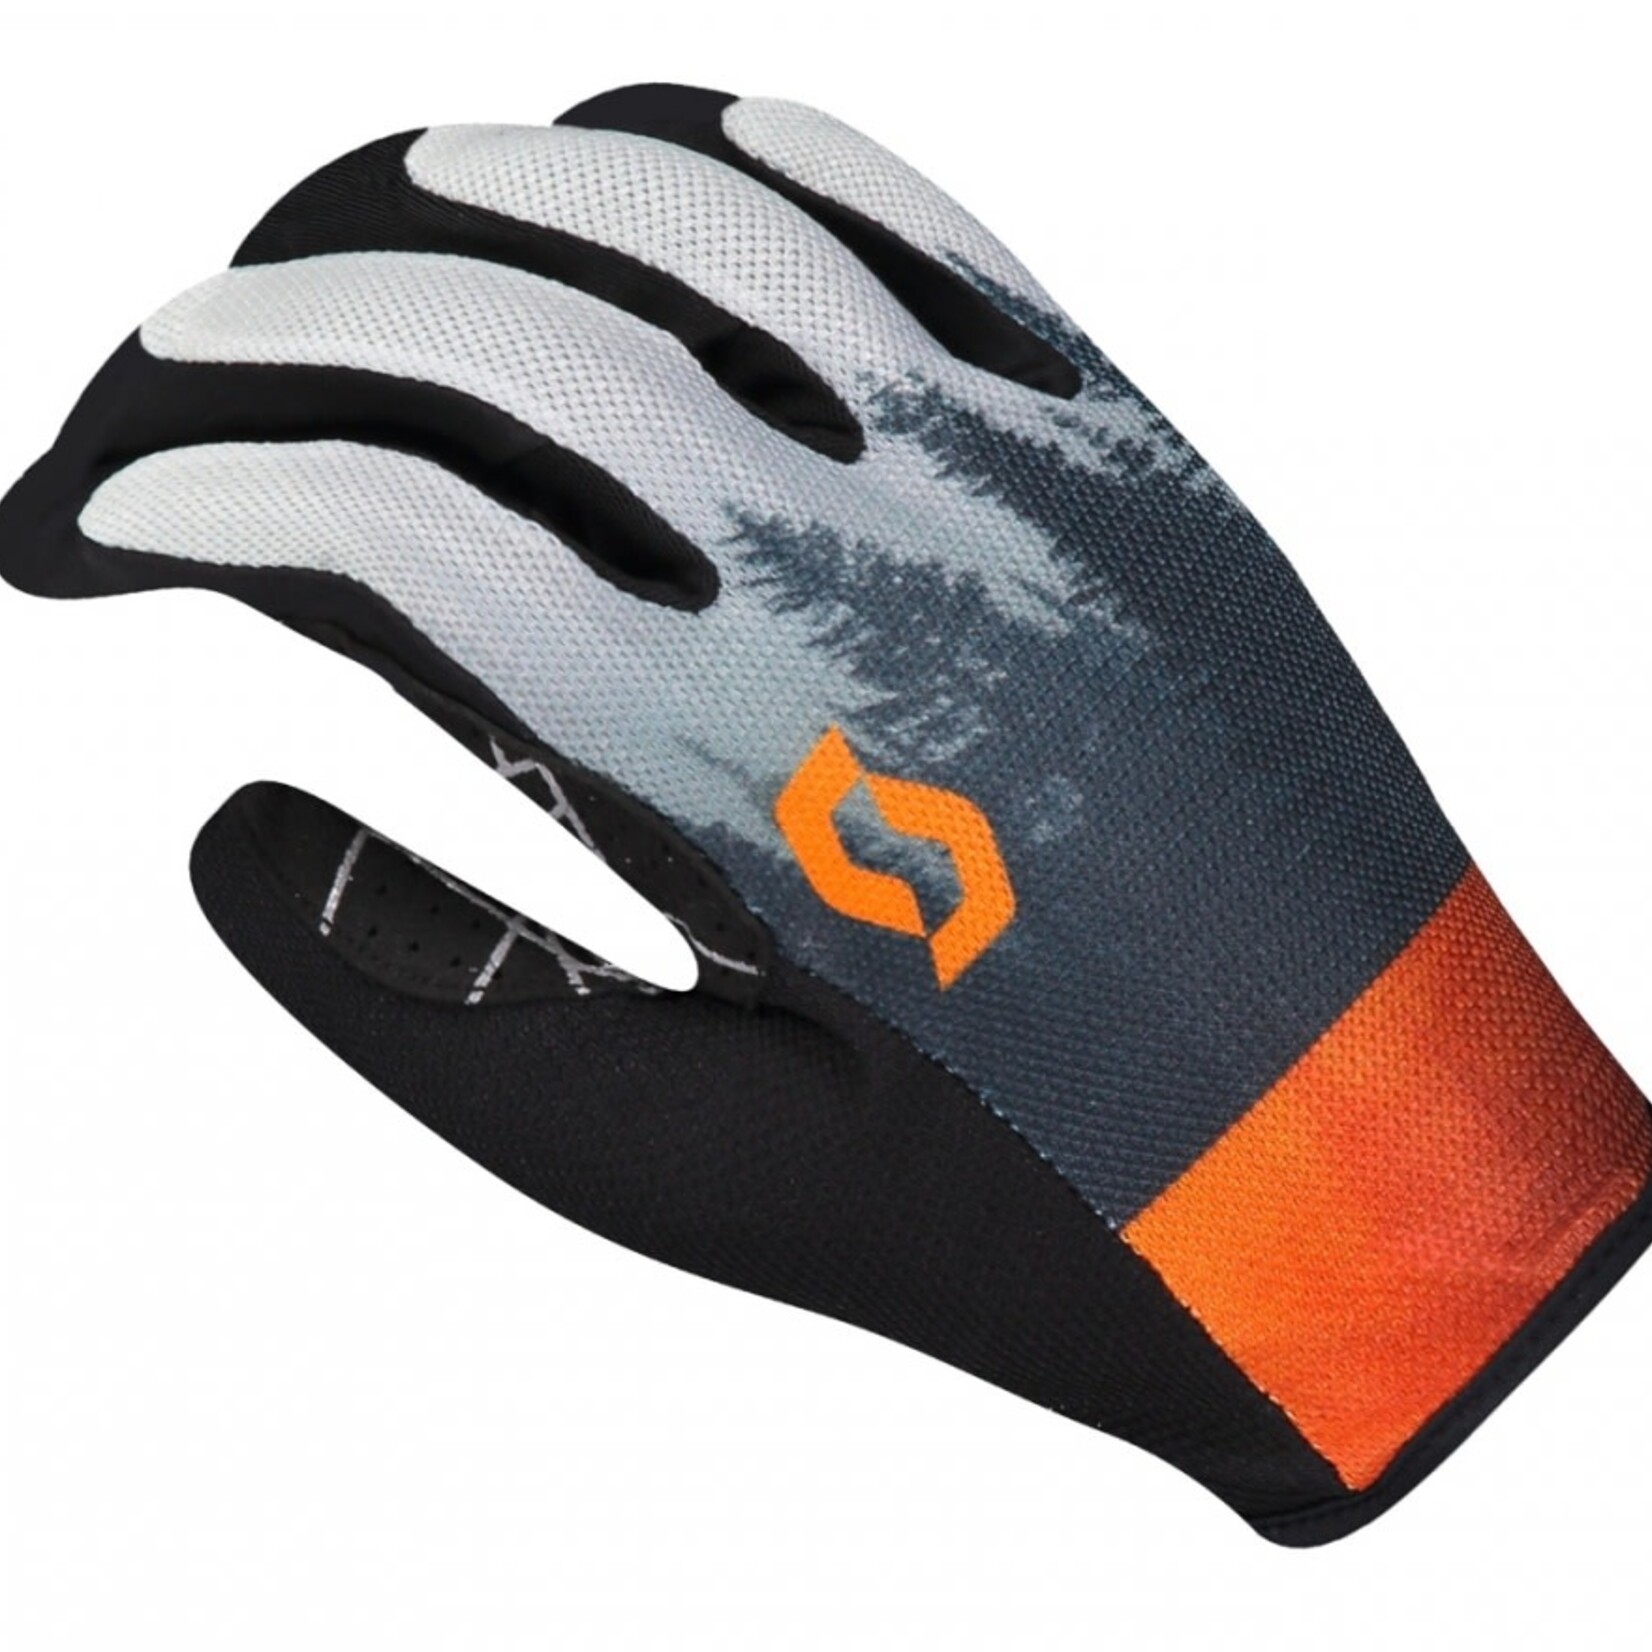 Scott SCO Glove Traction LF blck/dk grey L